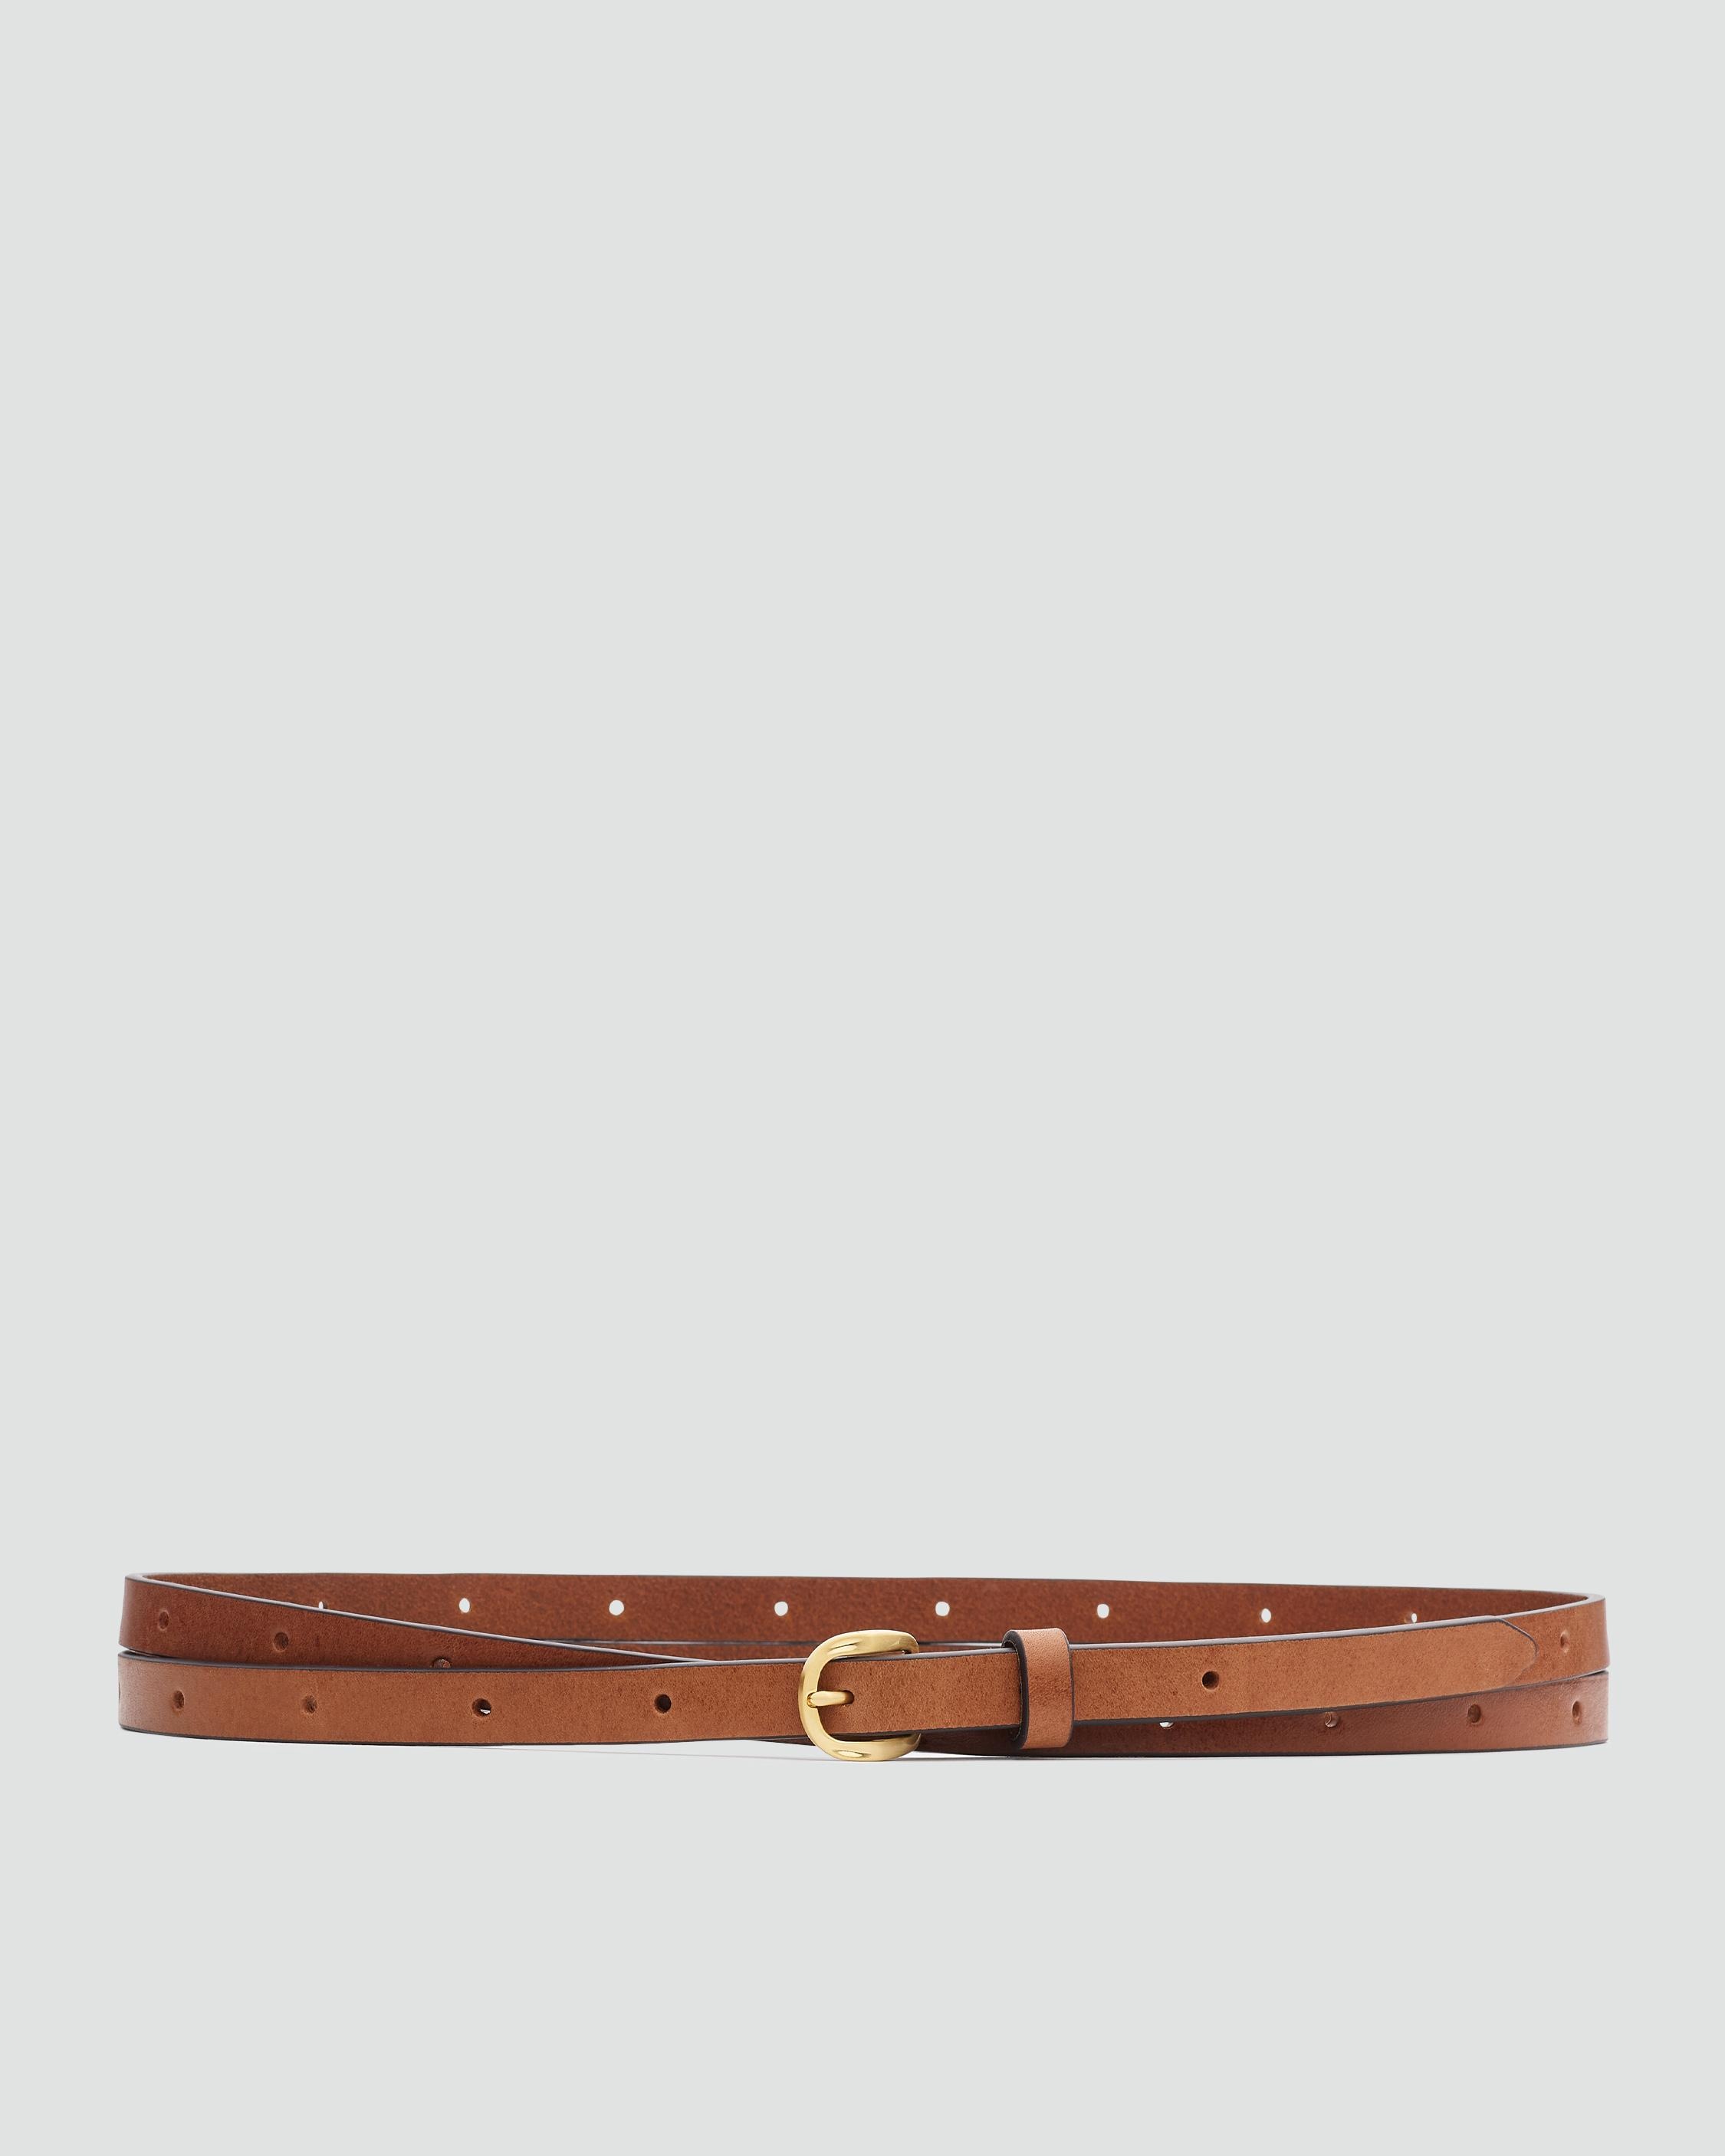 Mini Belize Belt
Leather Belt - 1